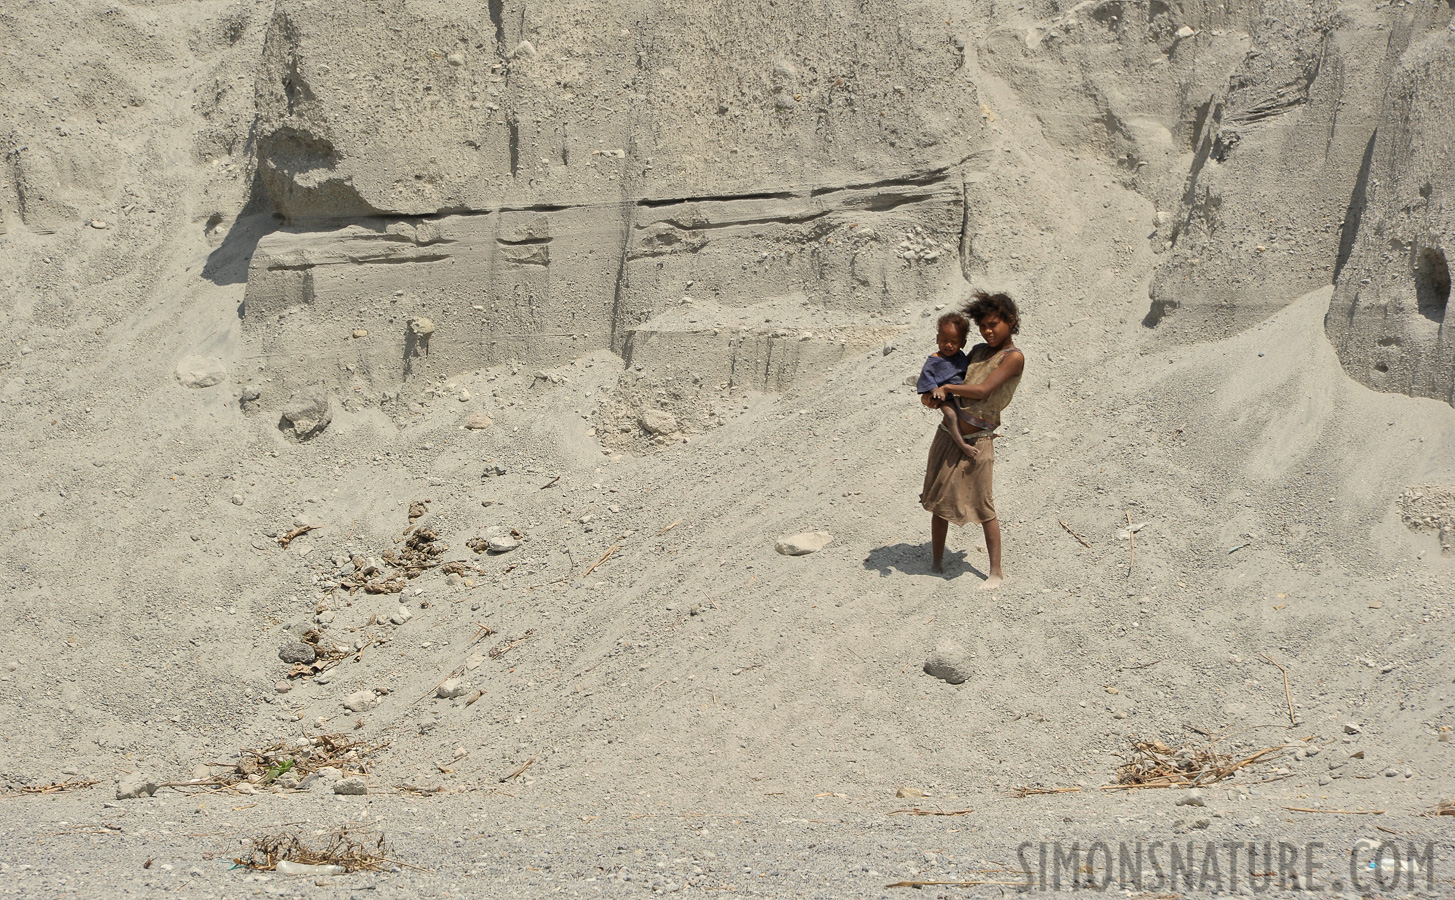 Mount Pinatubo [300 mm, 1/800 sec at f / 10, ISO 400]